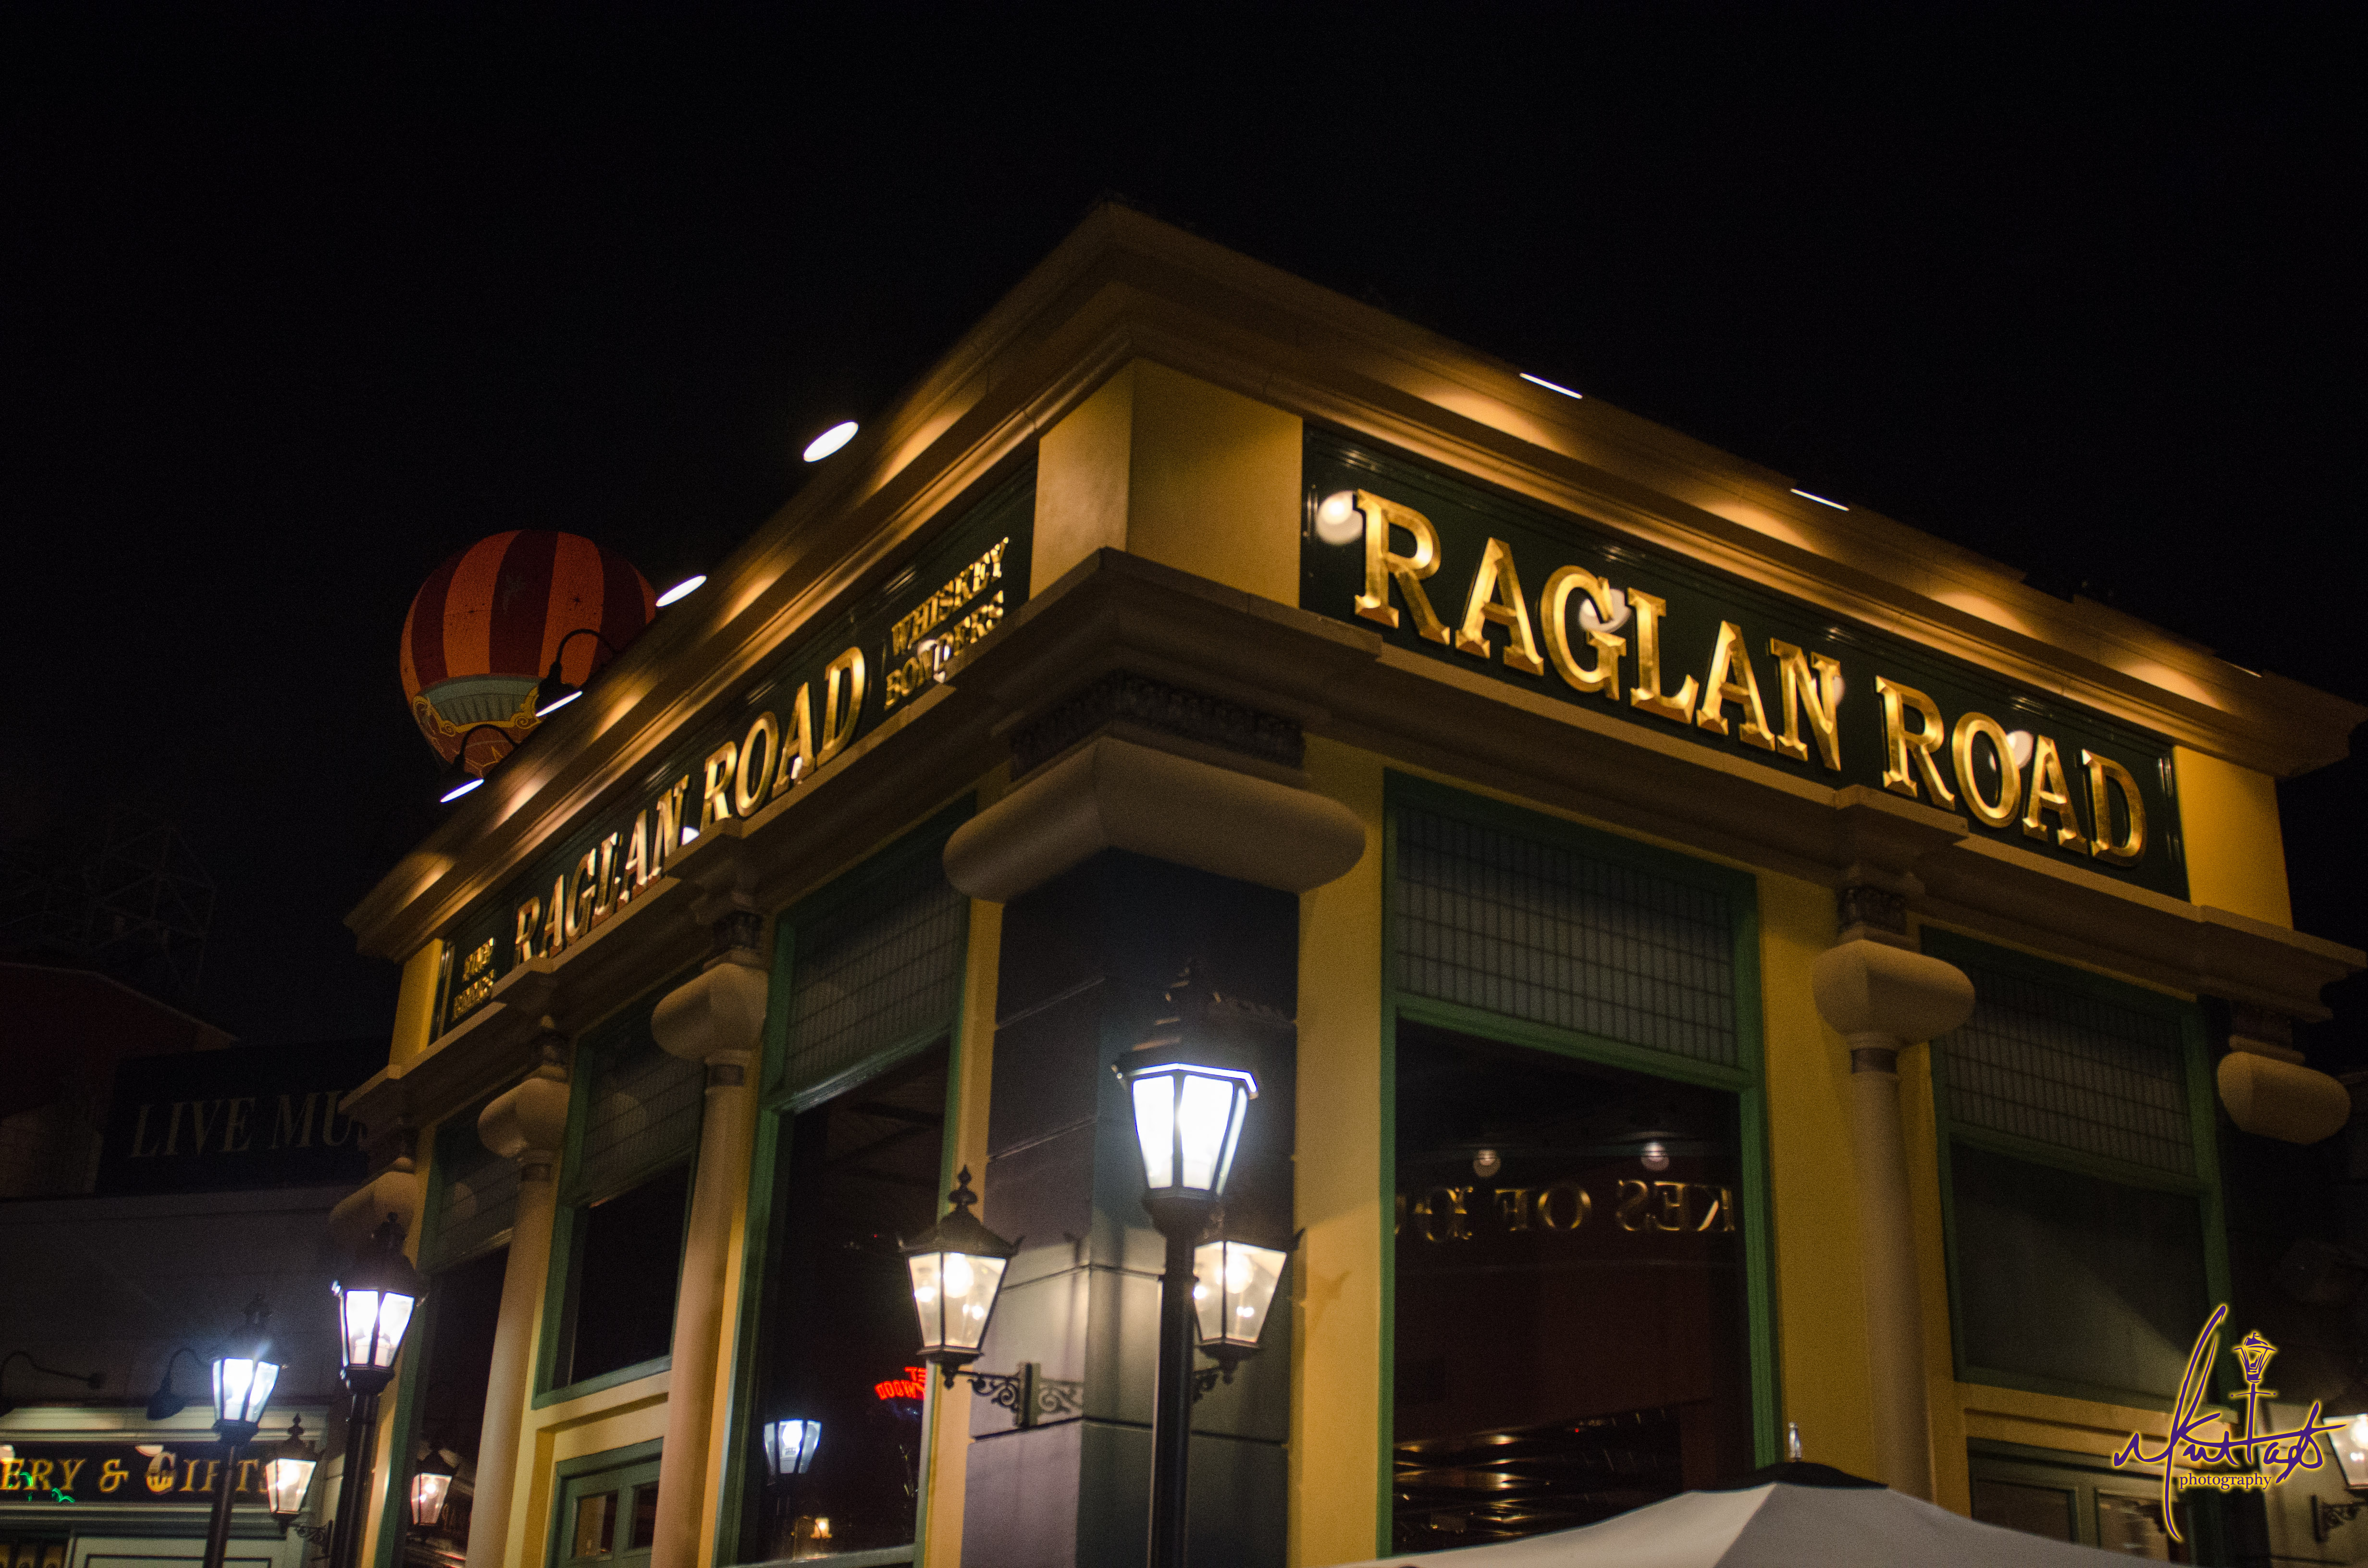 Great Irish Pubs and Restaurants in Orlando - TripSavvy